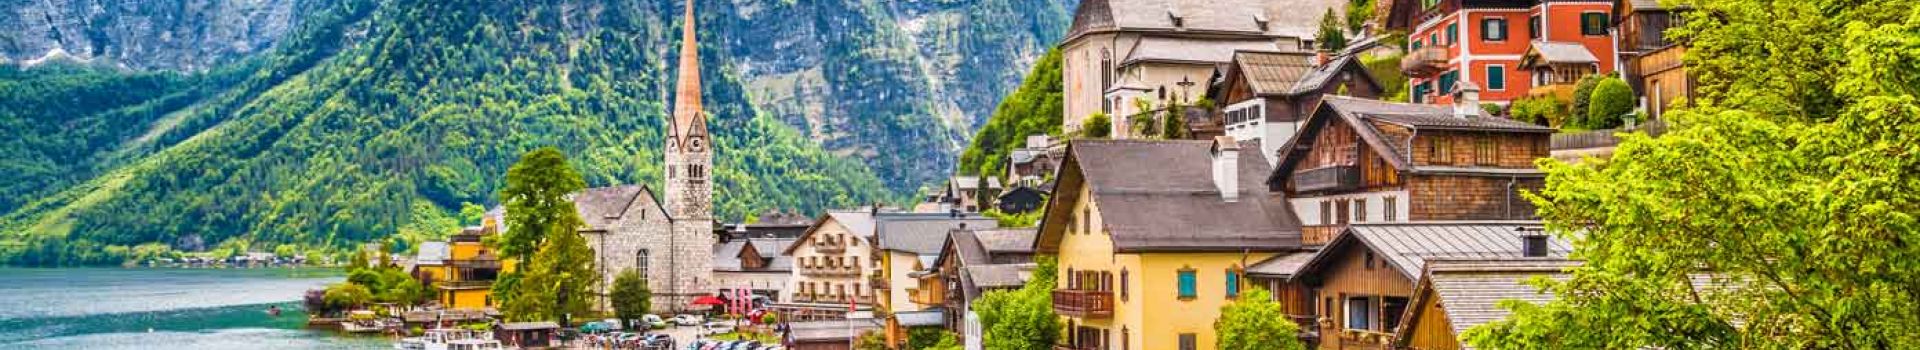 Country Destination Page - Holidays to Austria - Cassidy Travel